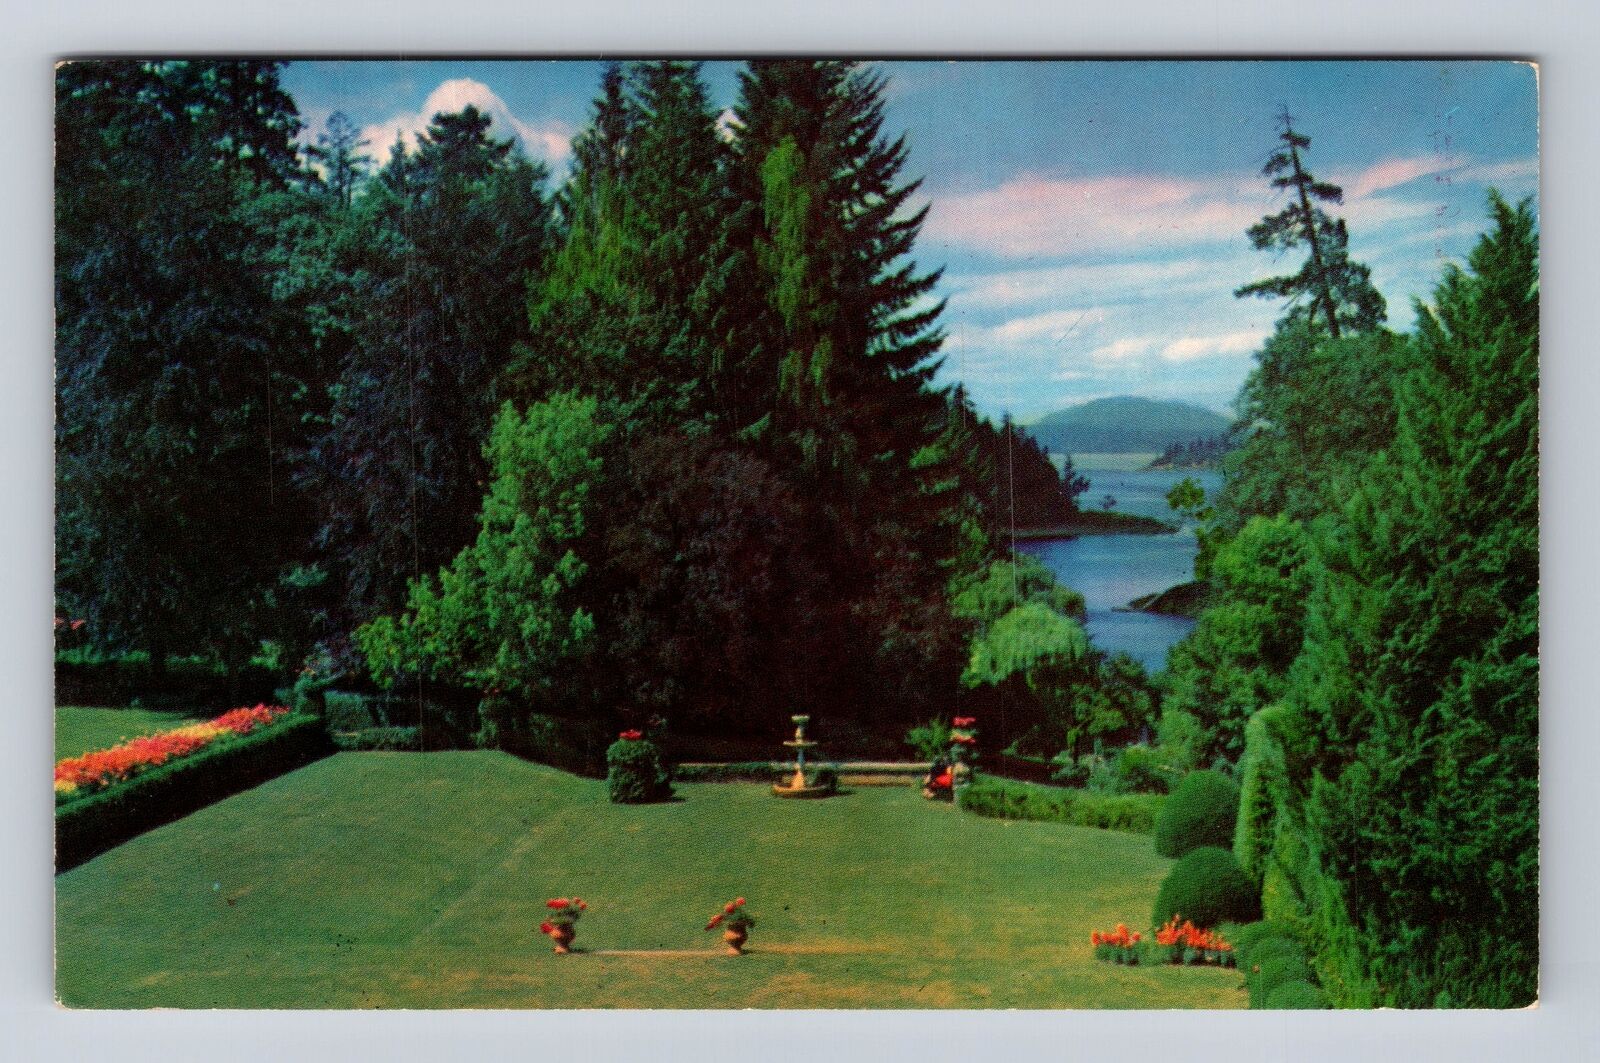 Victoria British Columbia-Canada, Butchart Gardens, Tod Inlet, Vintage Postcard